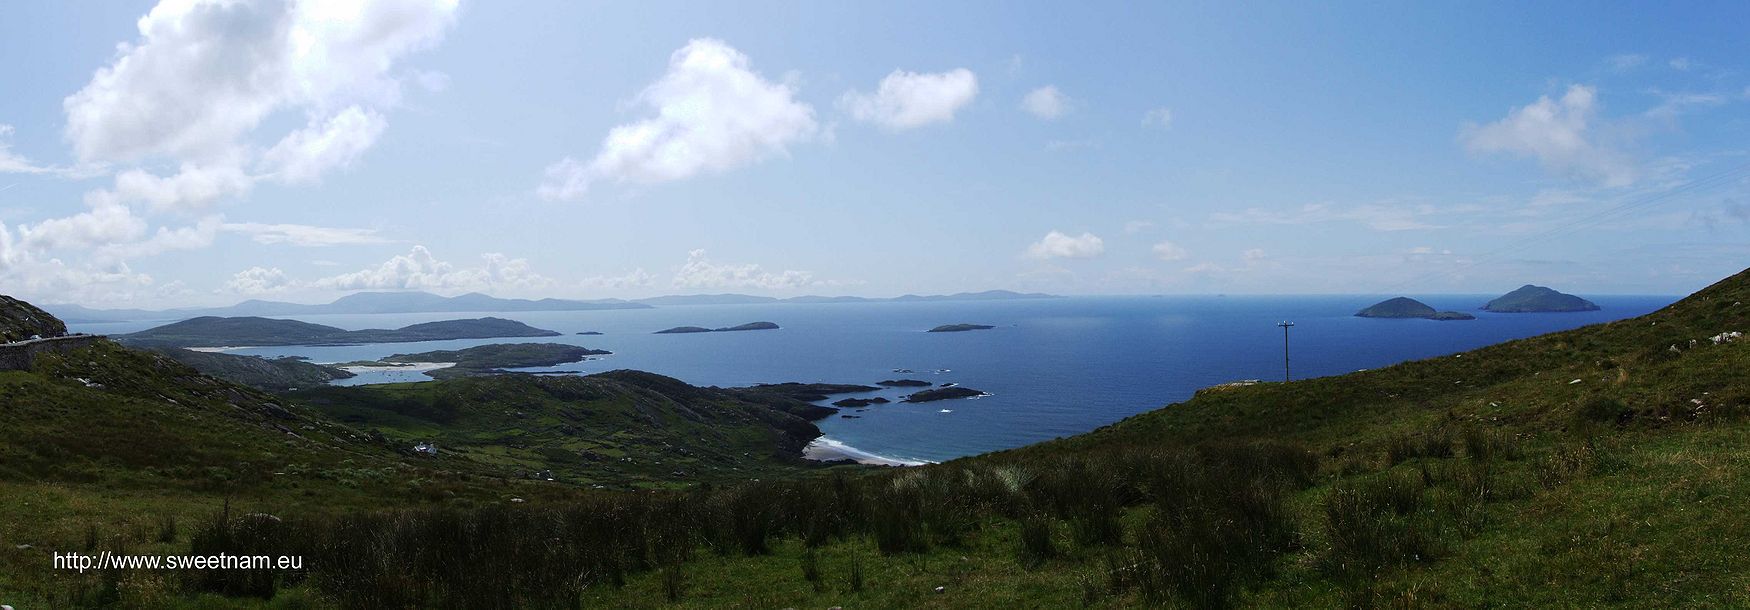 Panoramic photo of Caherdaniel, Co. Kerry.